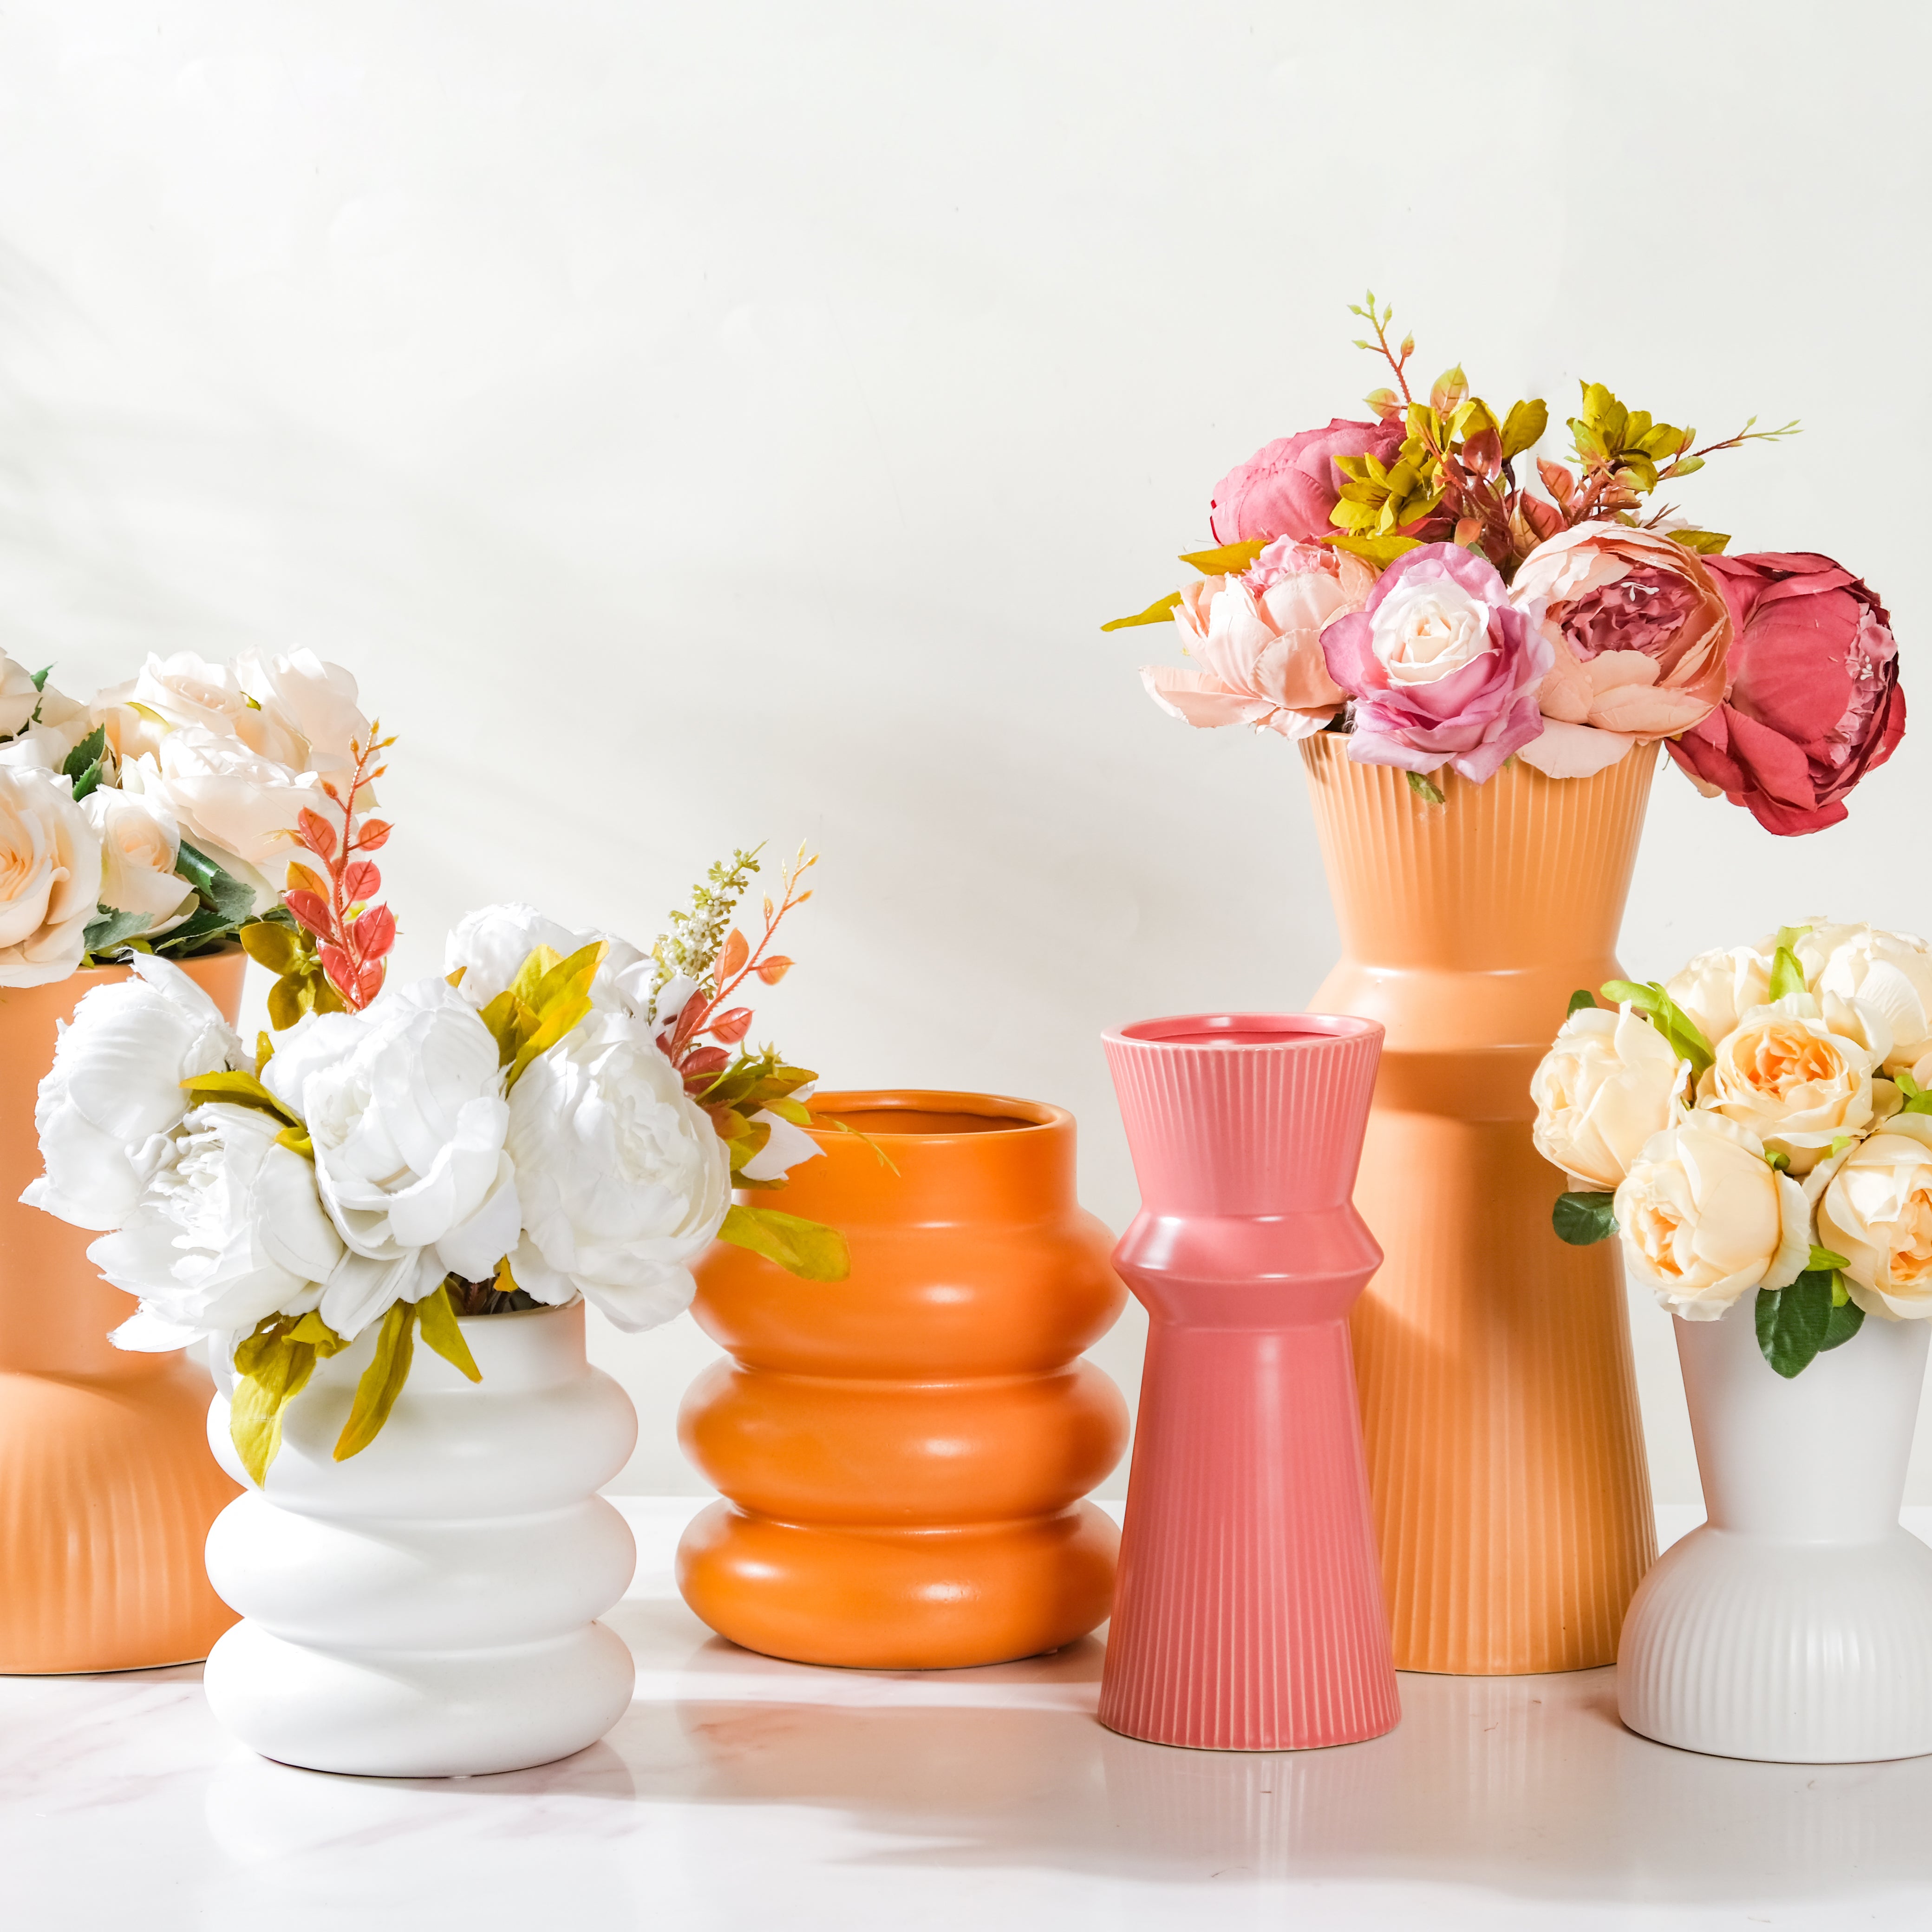 Flower Vases - Decorative Flower Vase Online at Best Prices